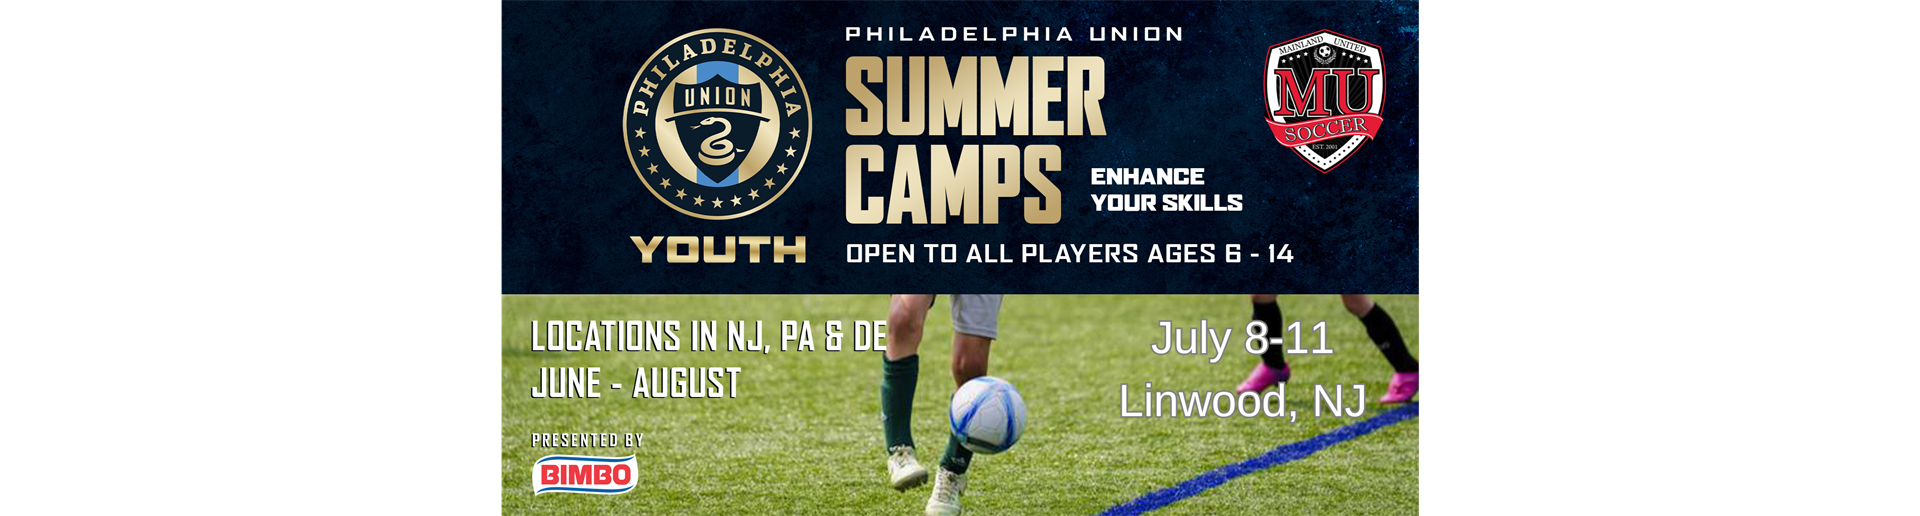 Philadelphia Union Summer Camp